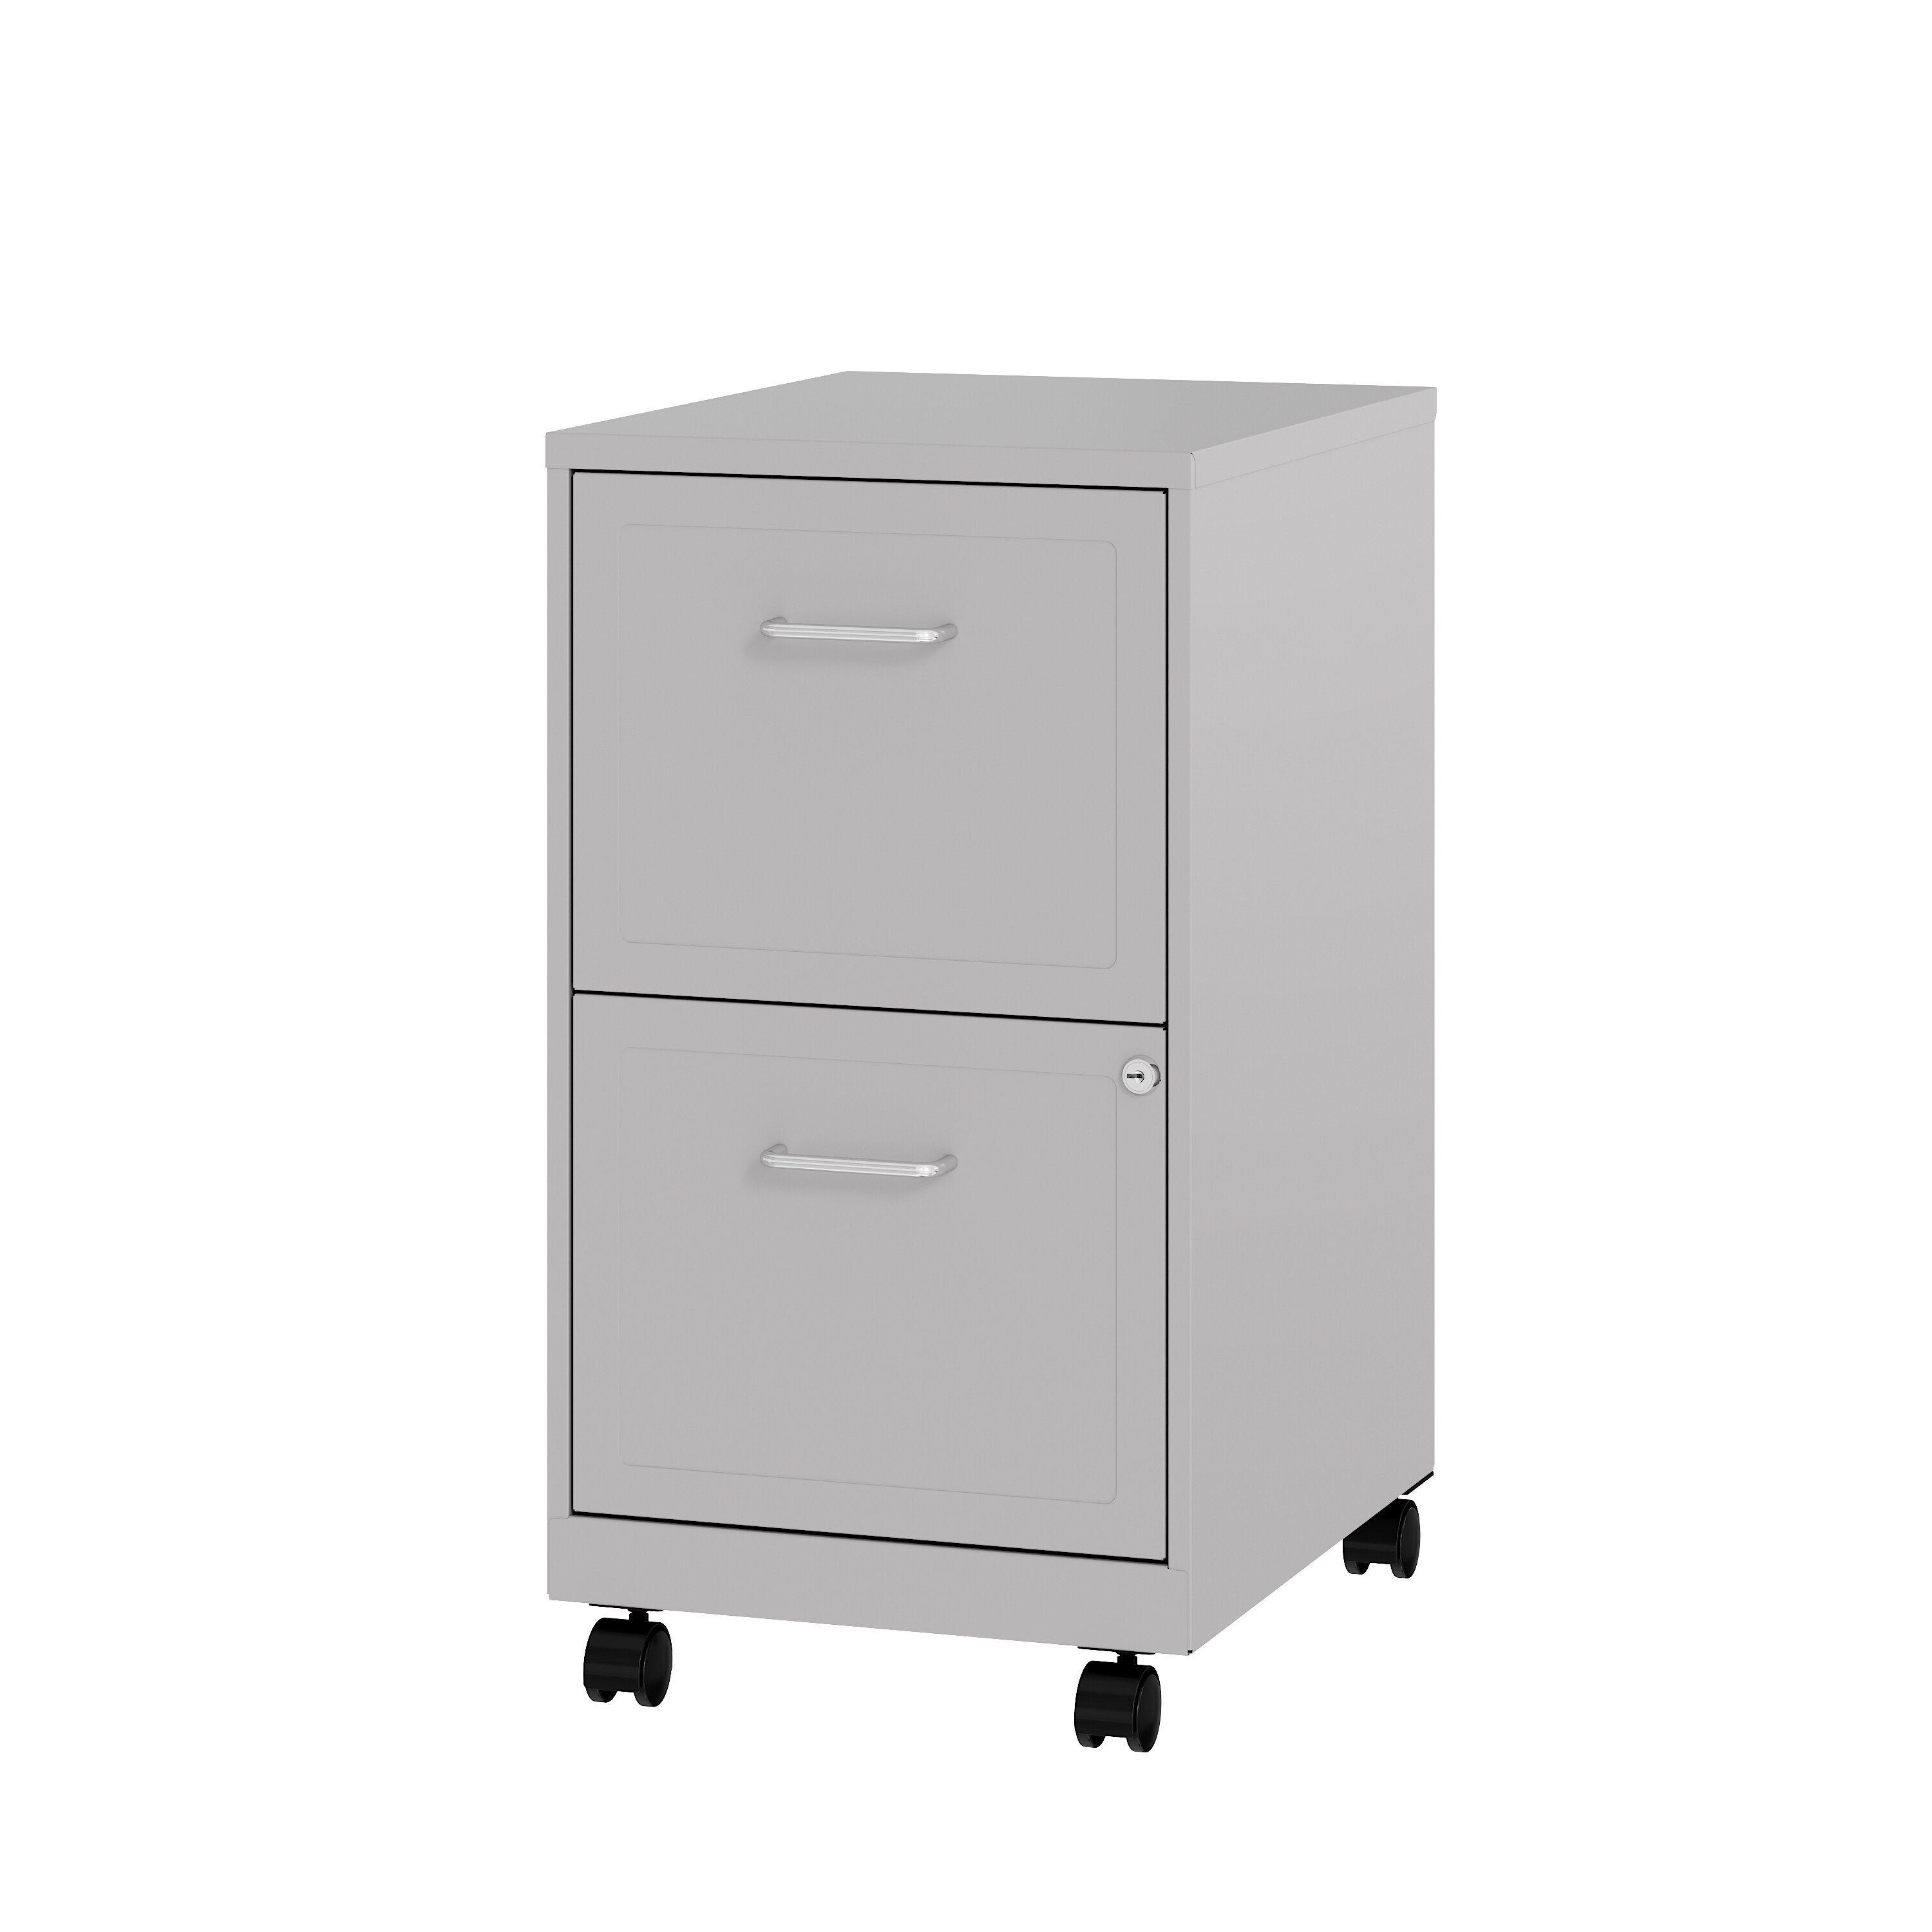 Office Metal Filing Cabinet Cupboard Drawer Unit on Castors Cabinet 5 Drawers UK 